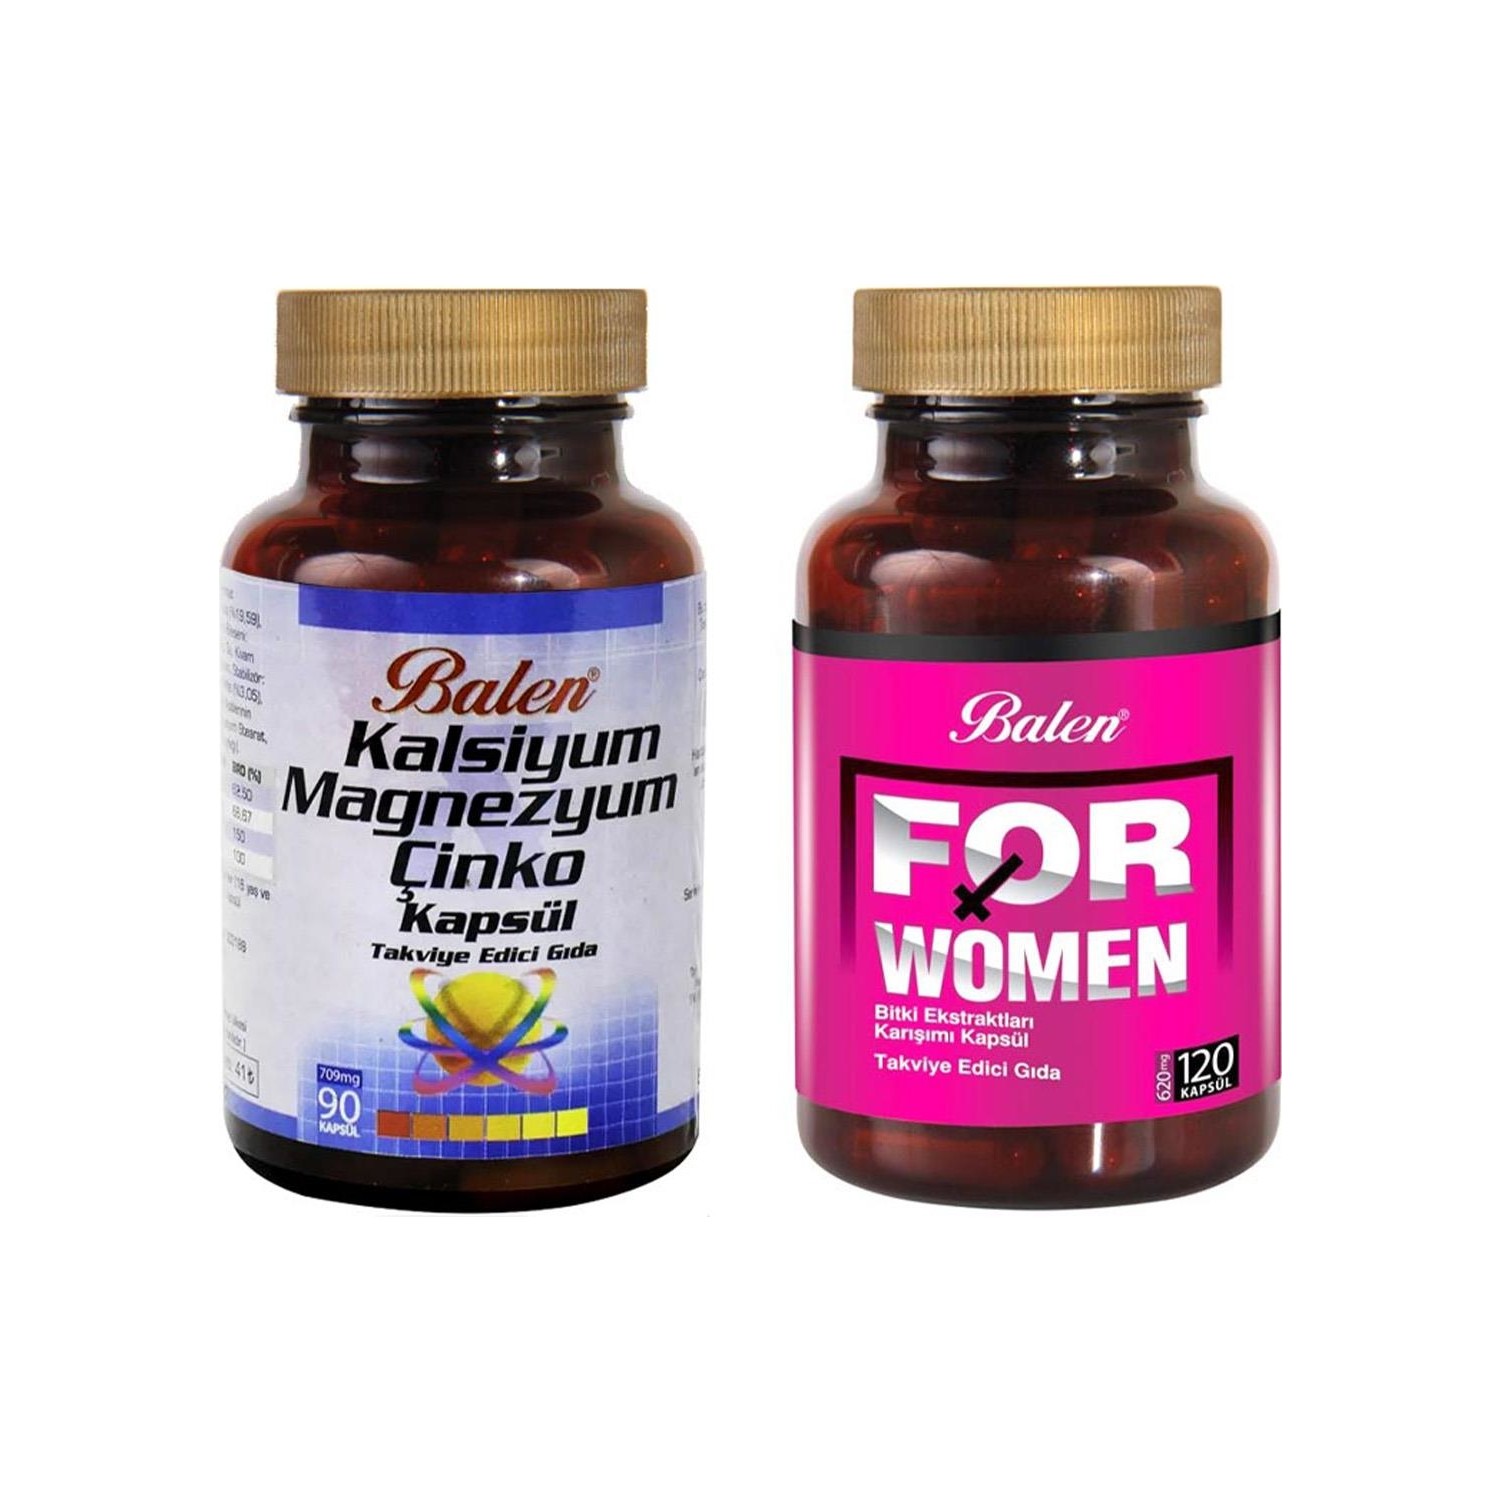 westpharm aakg 90 капсул 500 мг Активная добавка Balen For Woman, 120 капсул, 500 мг + Витаминный комплекс Balen Calcium Magnesium Zinc, 90 капсул, 709 мг